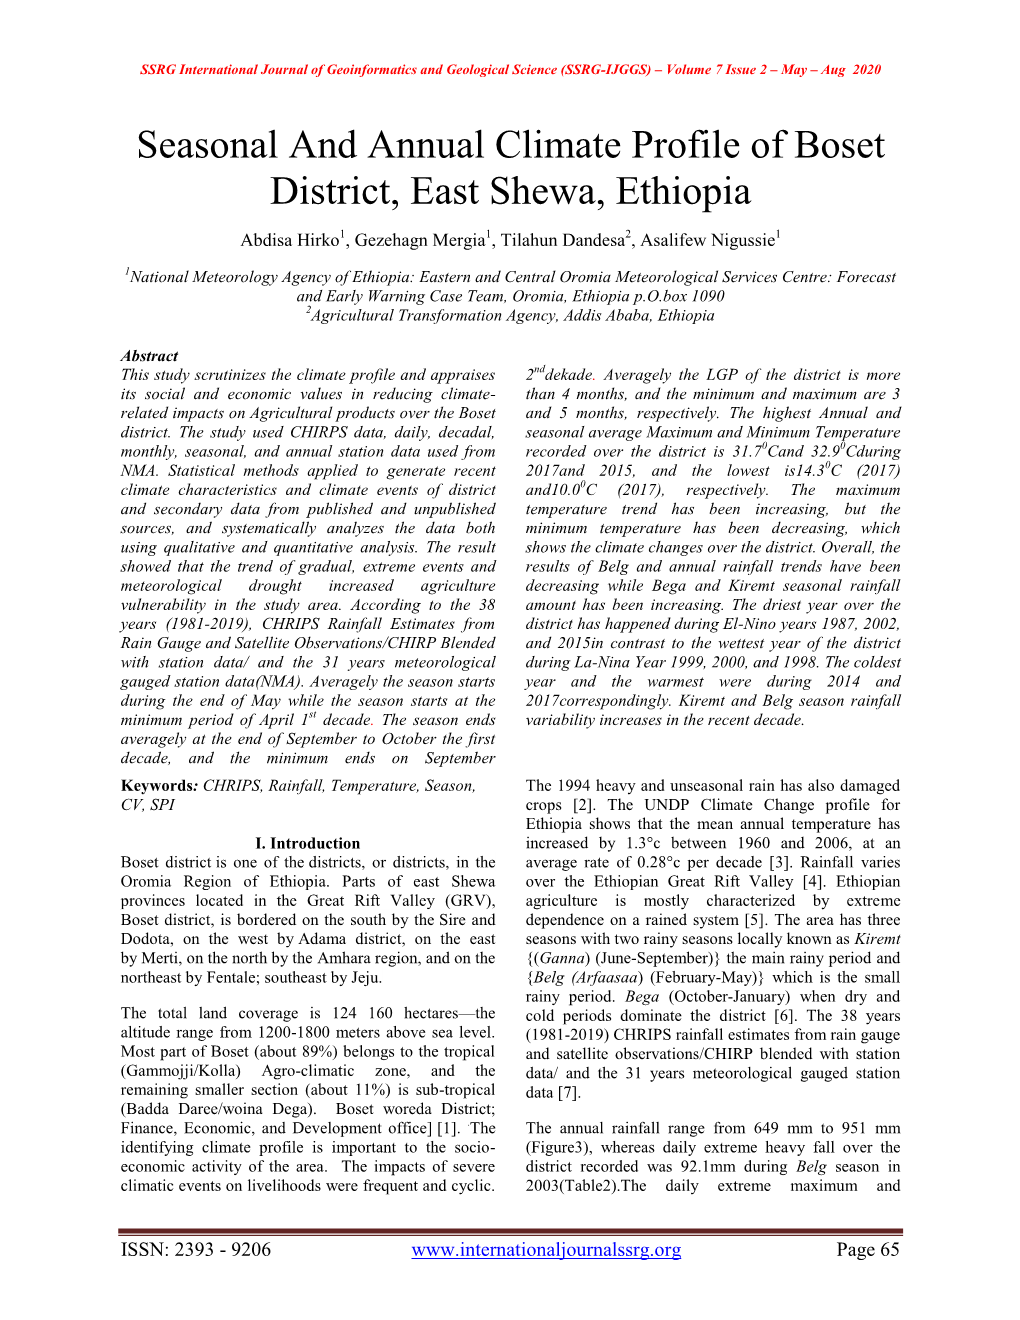 Seasonal and Annual Climate Profile of Boset District, East Shewa, Ethiopia